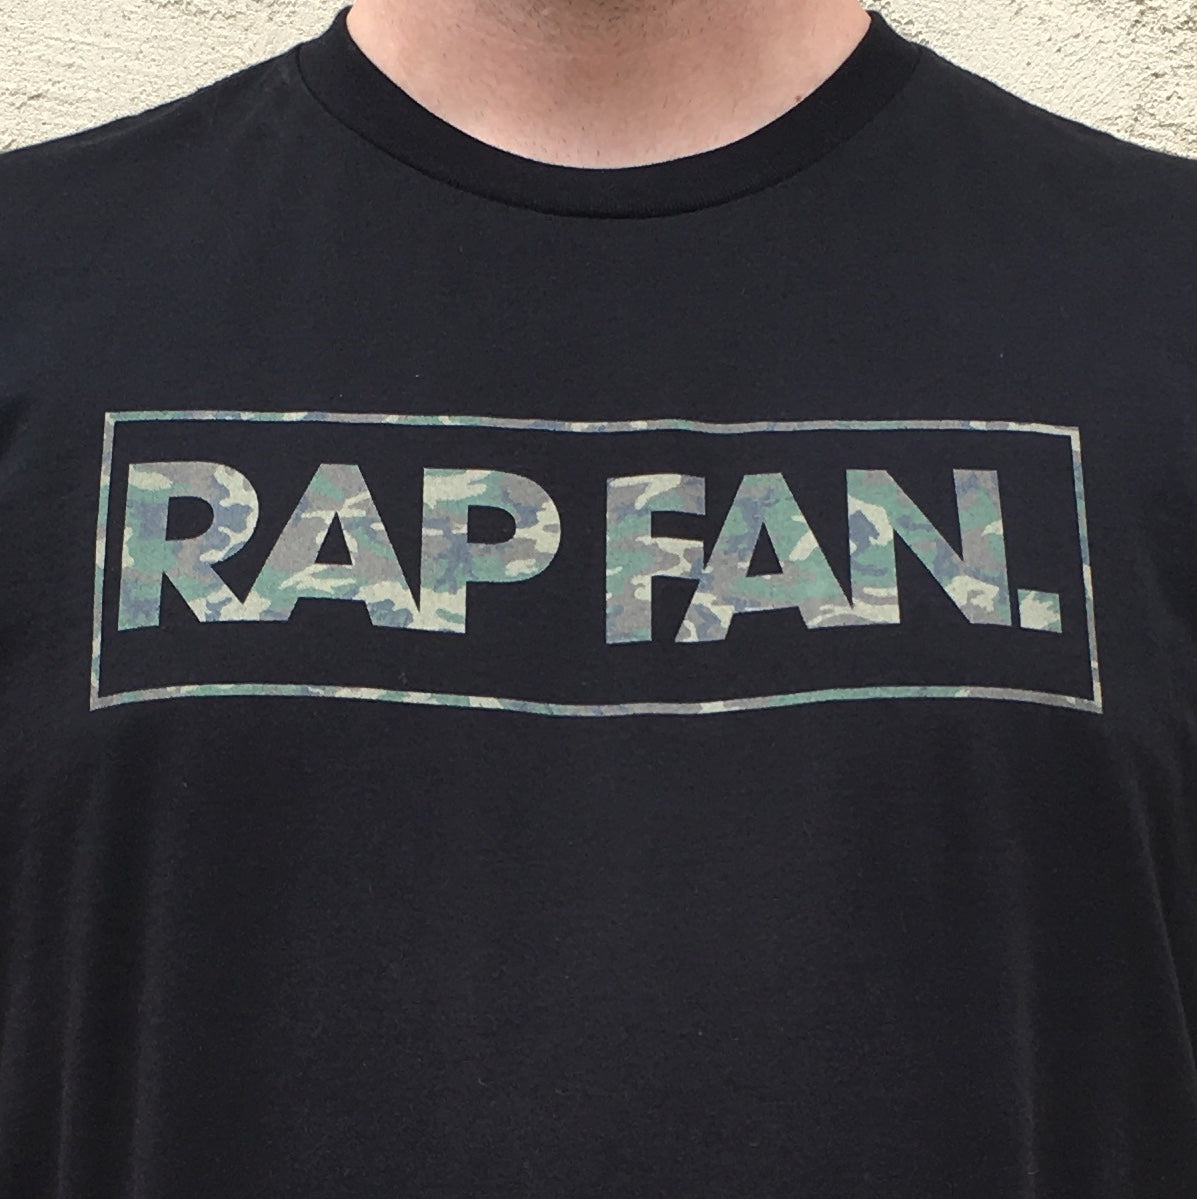 RAP - Gap Rap - T-Shirt